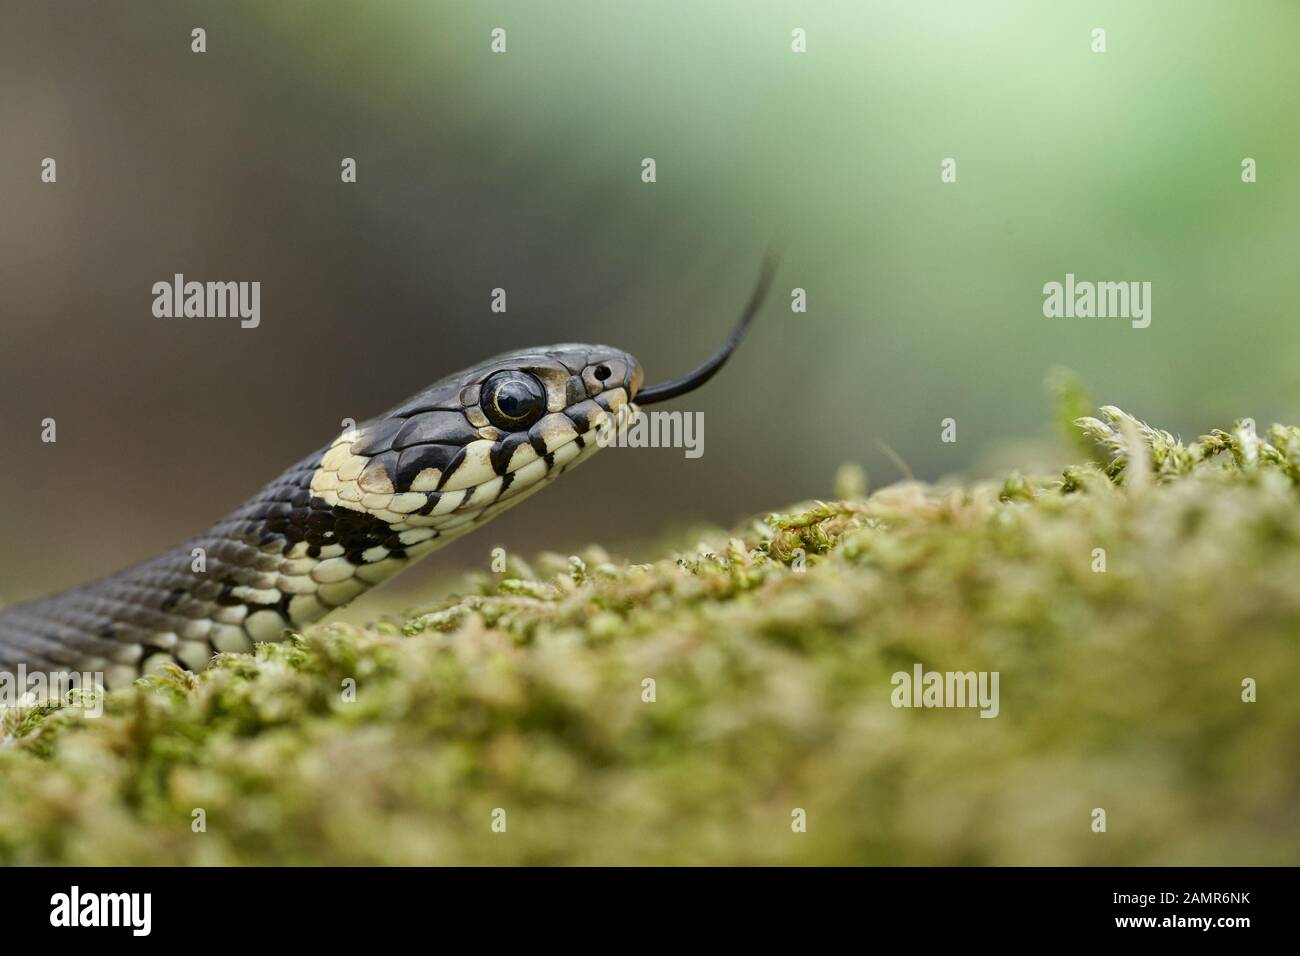 The Grass snake Natrix natrix in Czech Republic Stock Photo